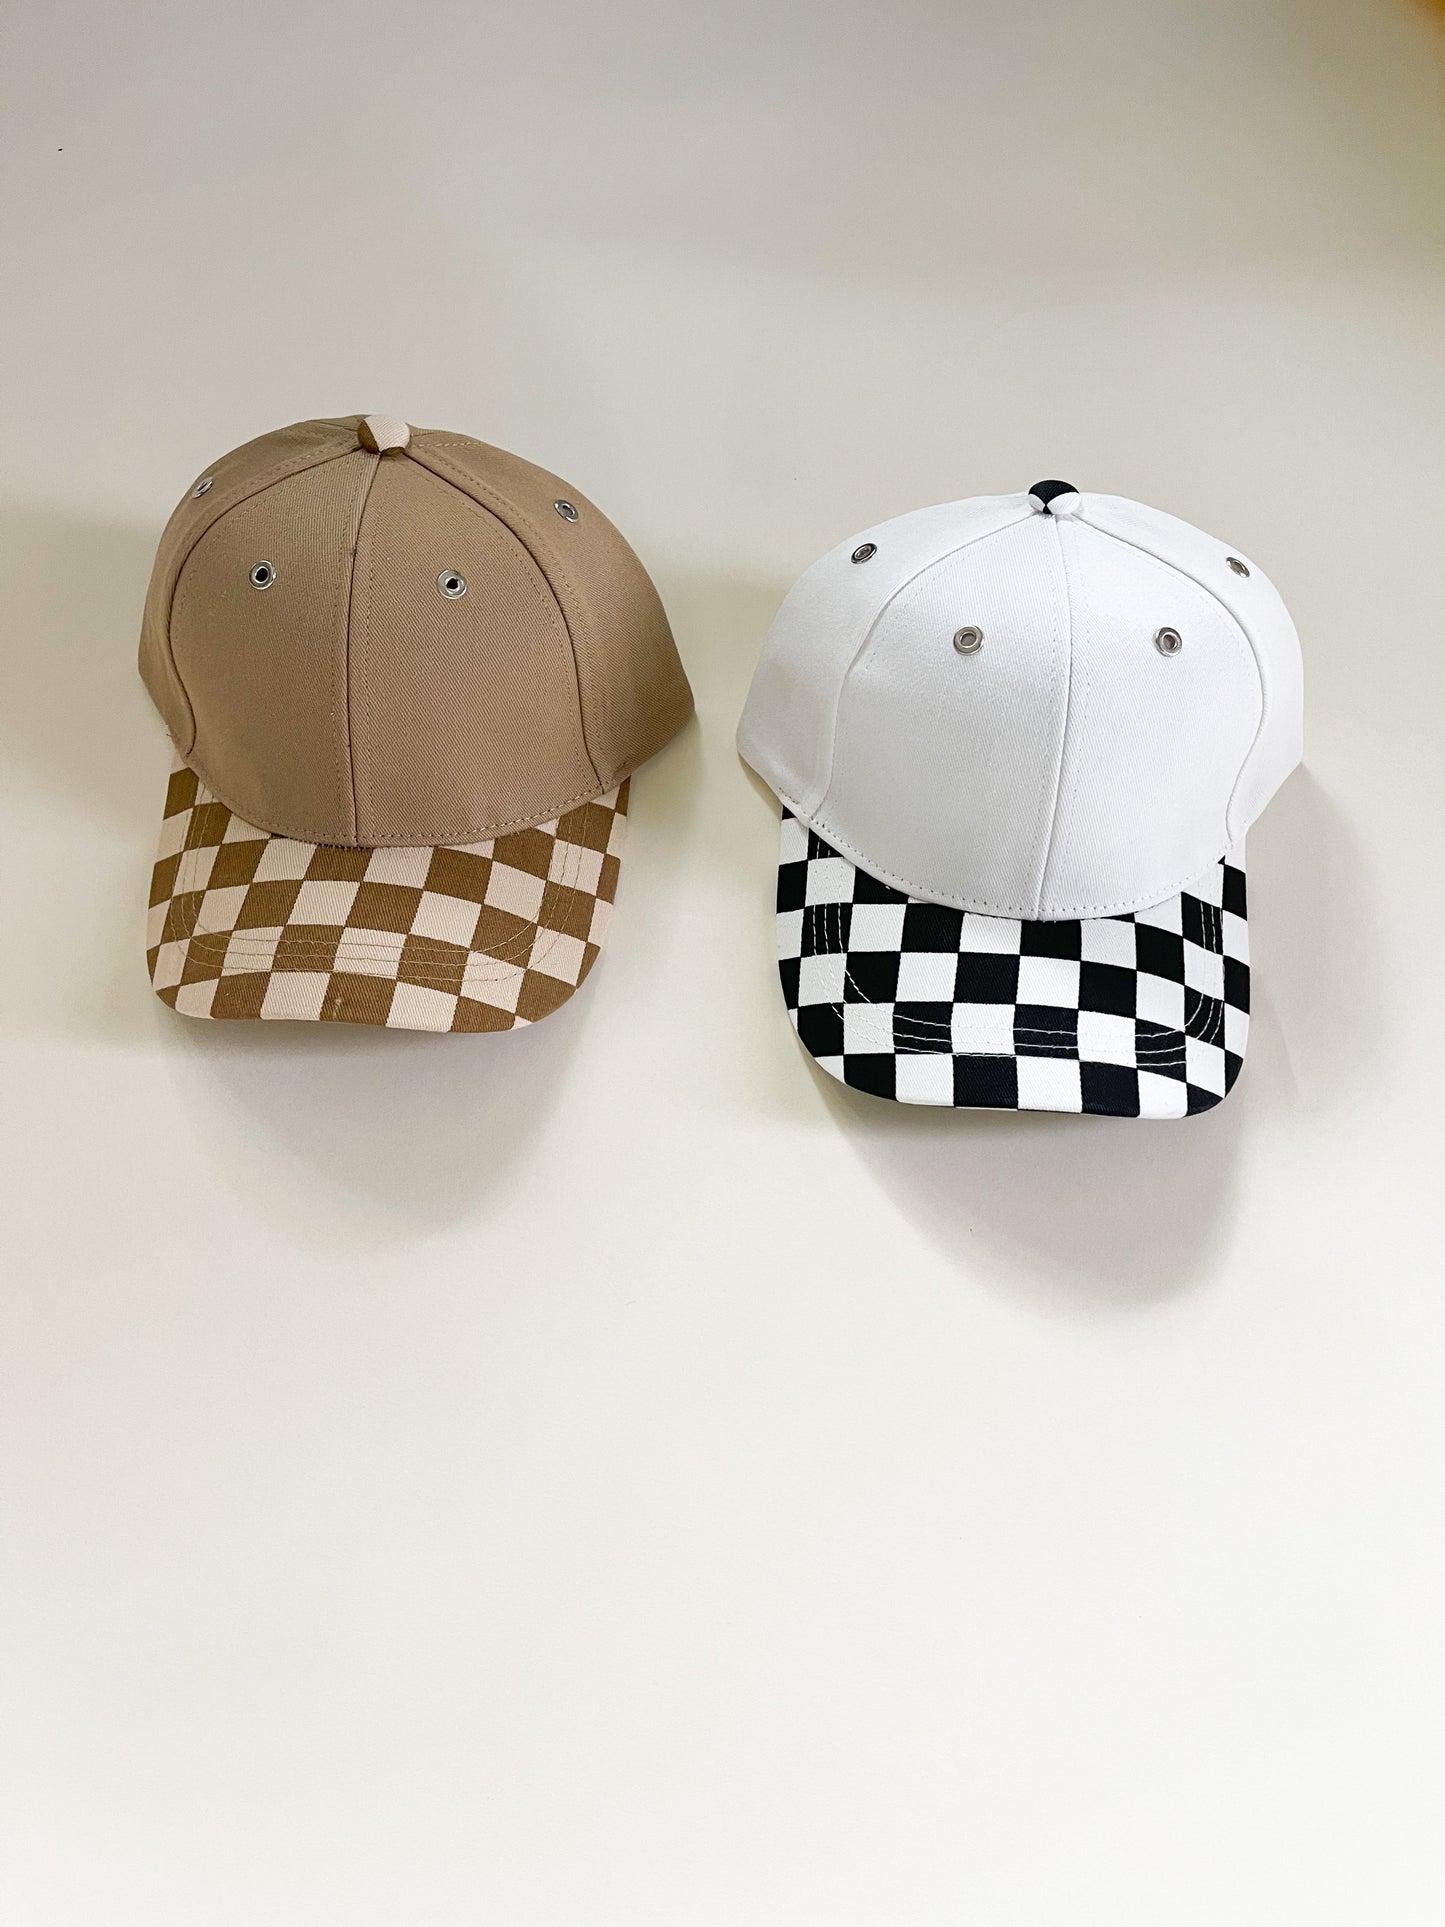 Checkered hats